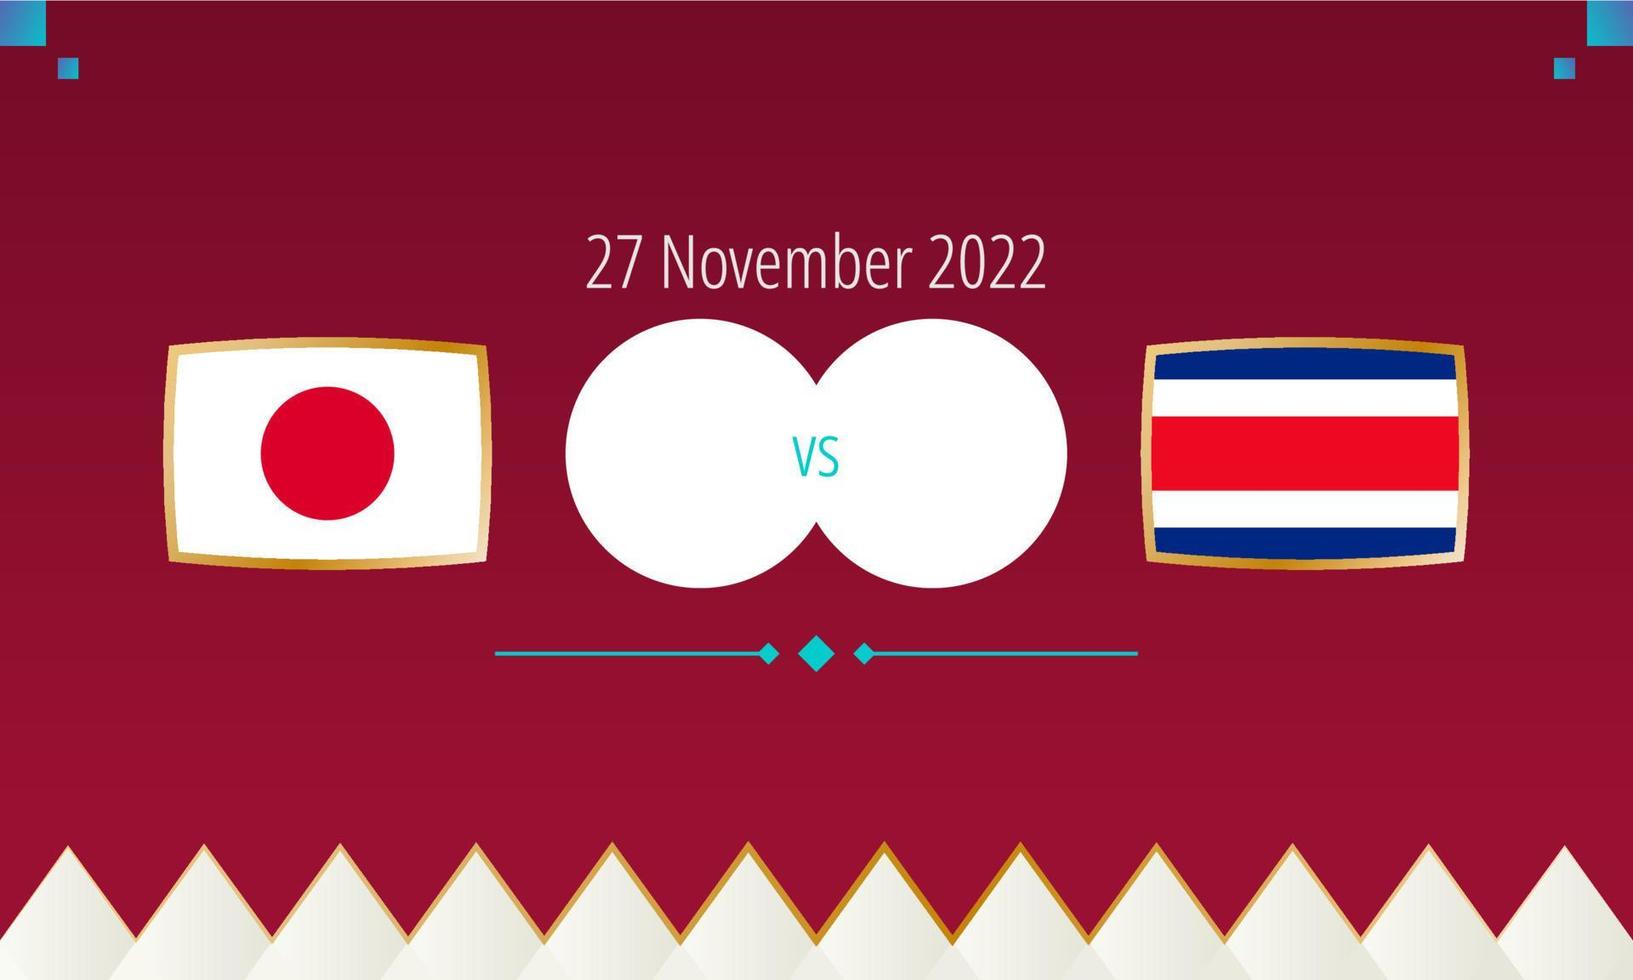 Japan vs Costa Rica football match, international soccer competition 2022. vector